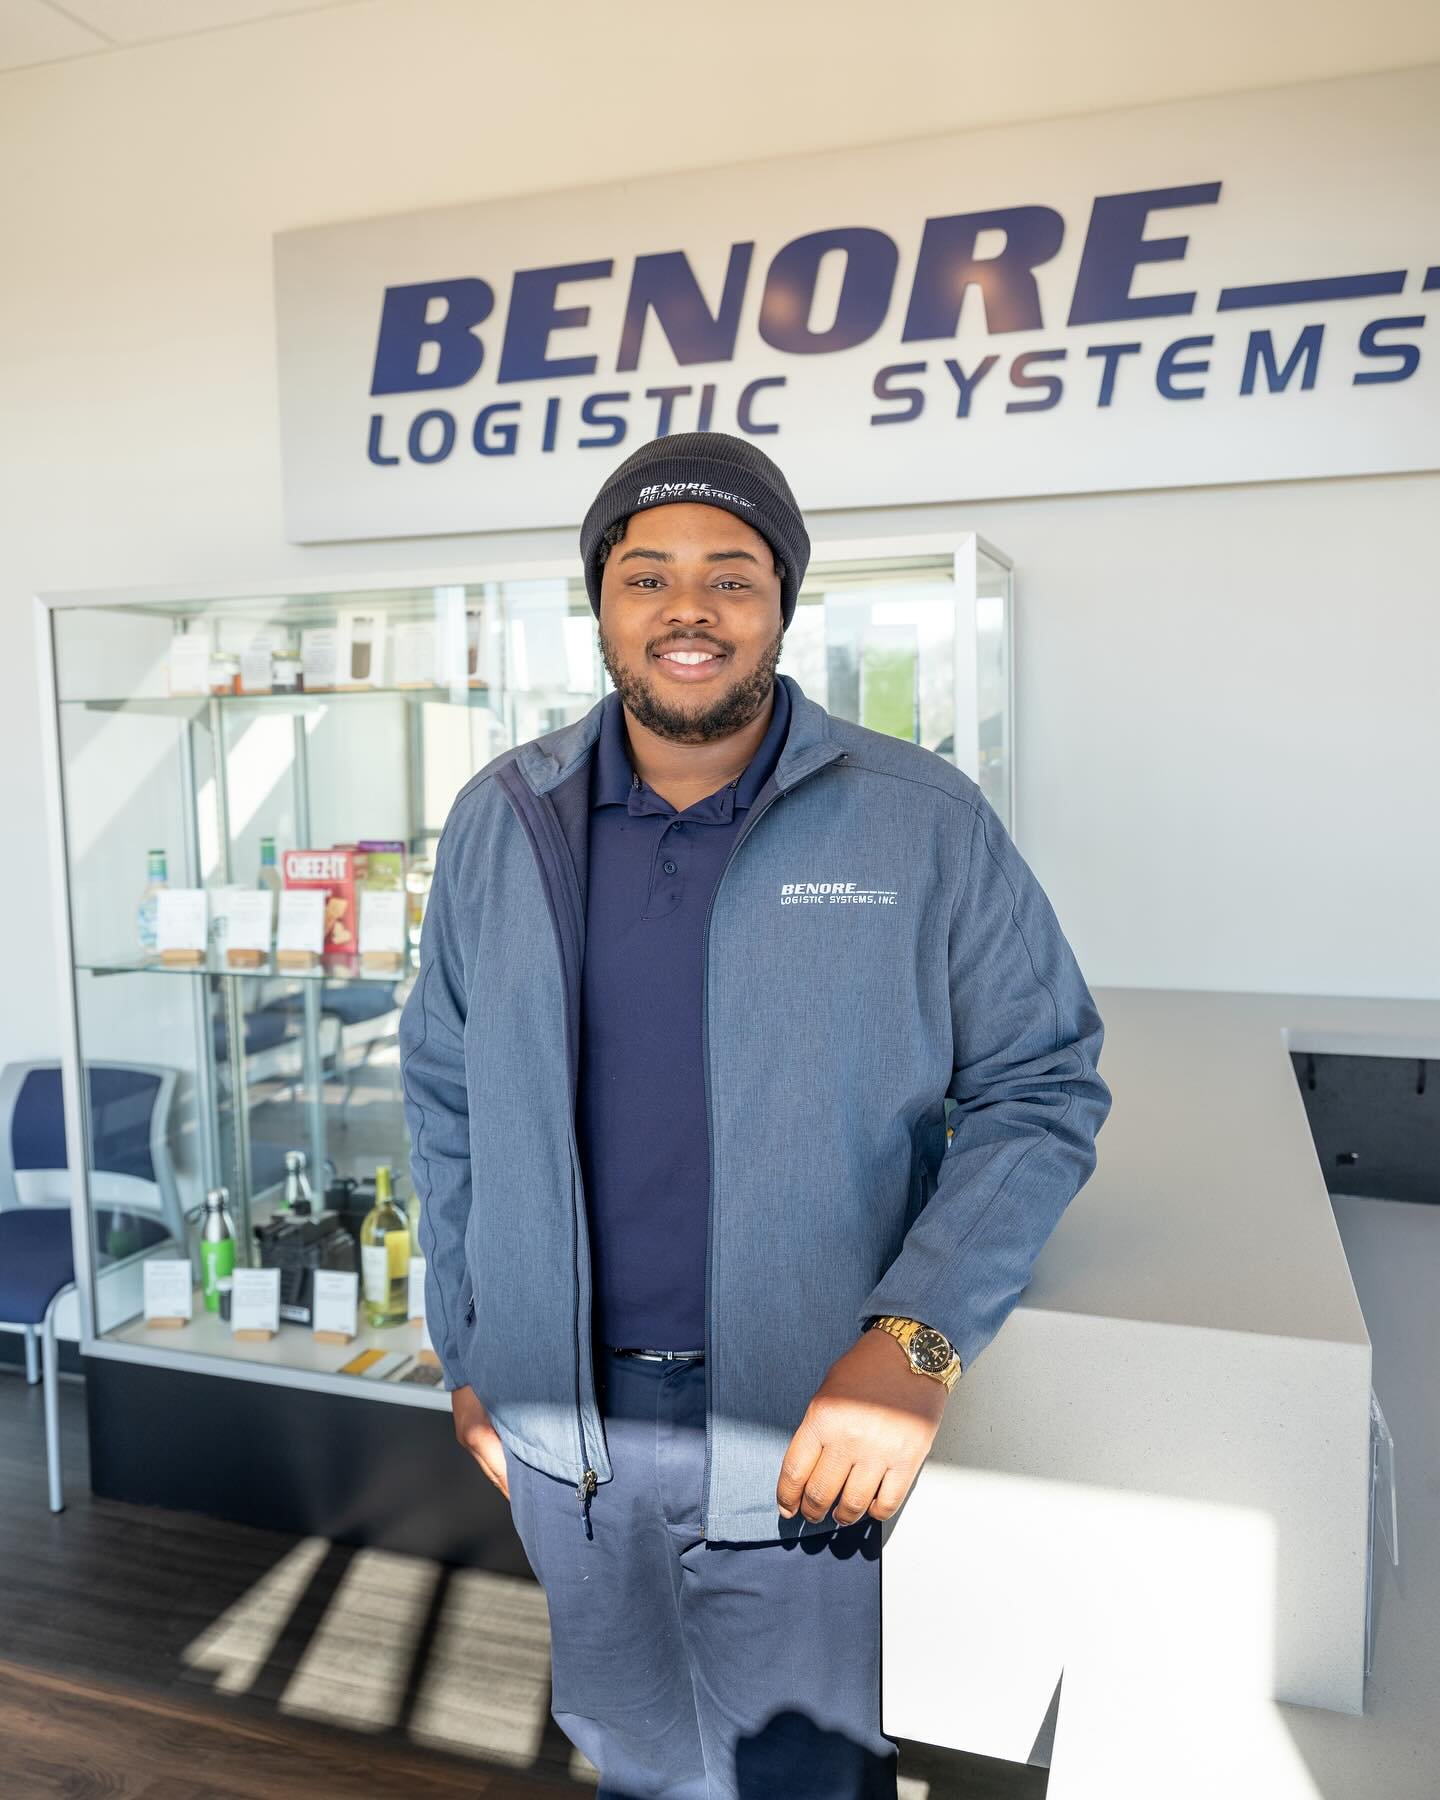 Smiling into the weekend. Happy Friday, Team Benore! 🙌

#BenoreLogistics #APartnershipInPerformance #TeamBenore